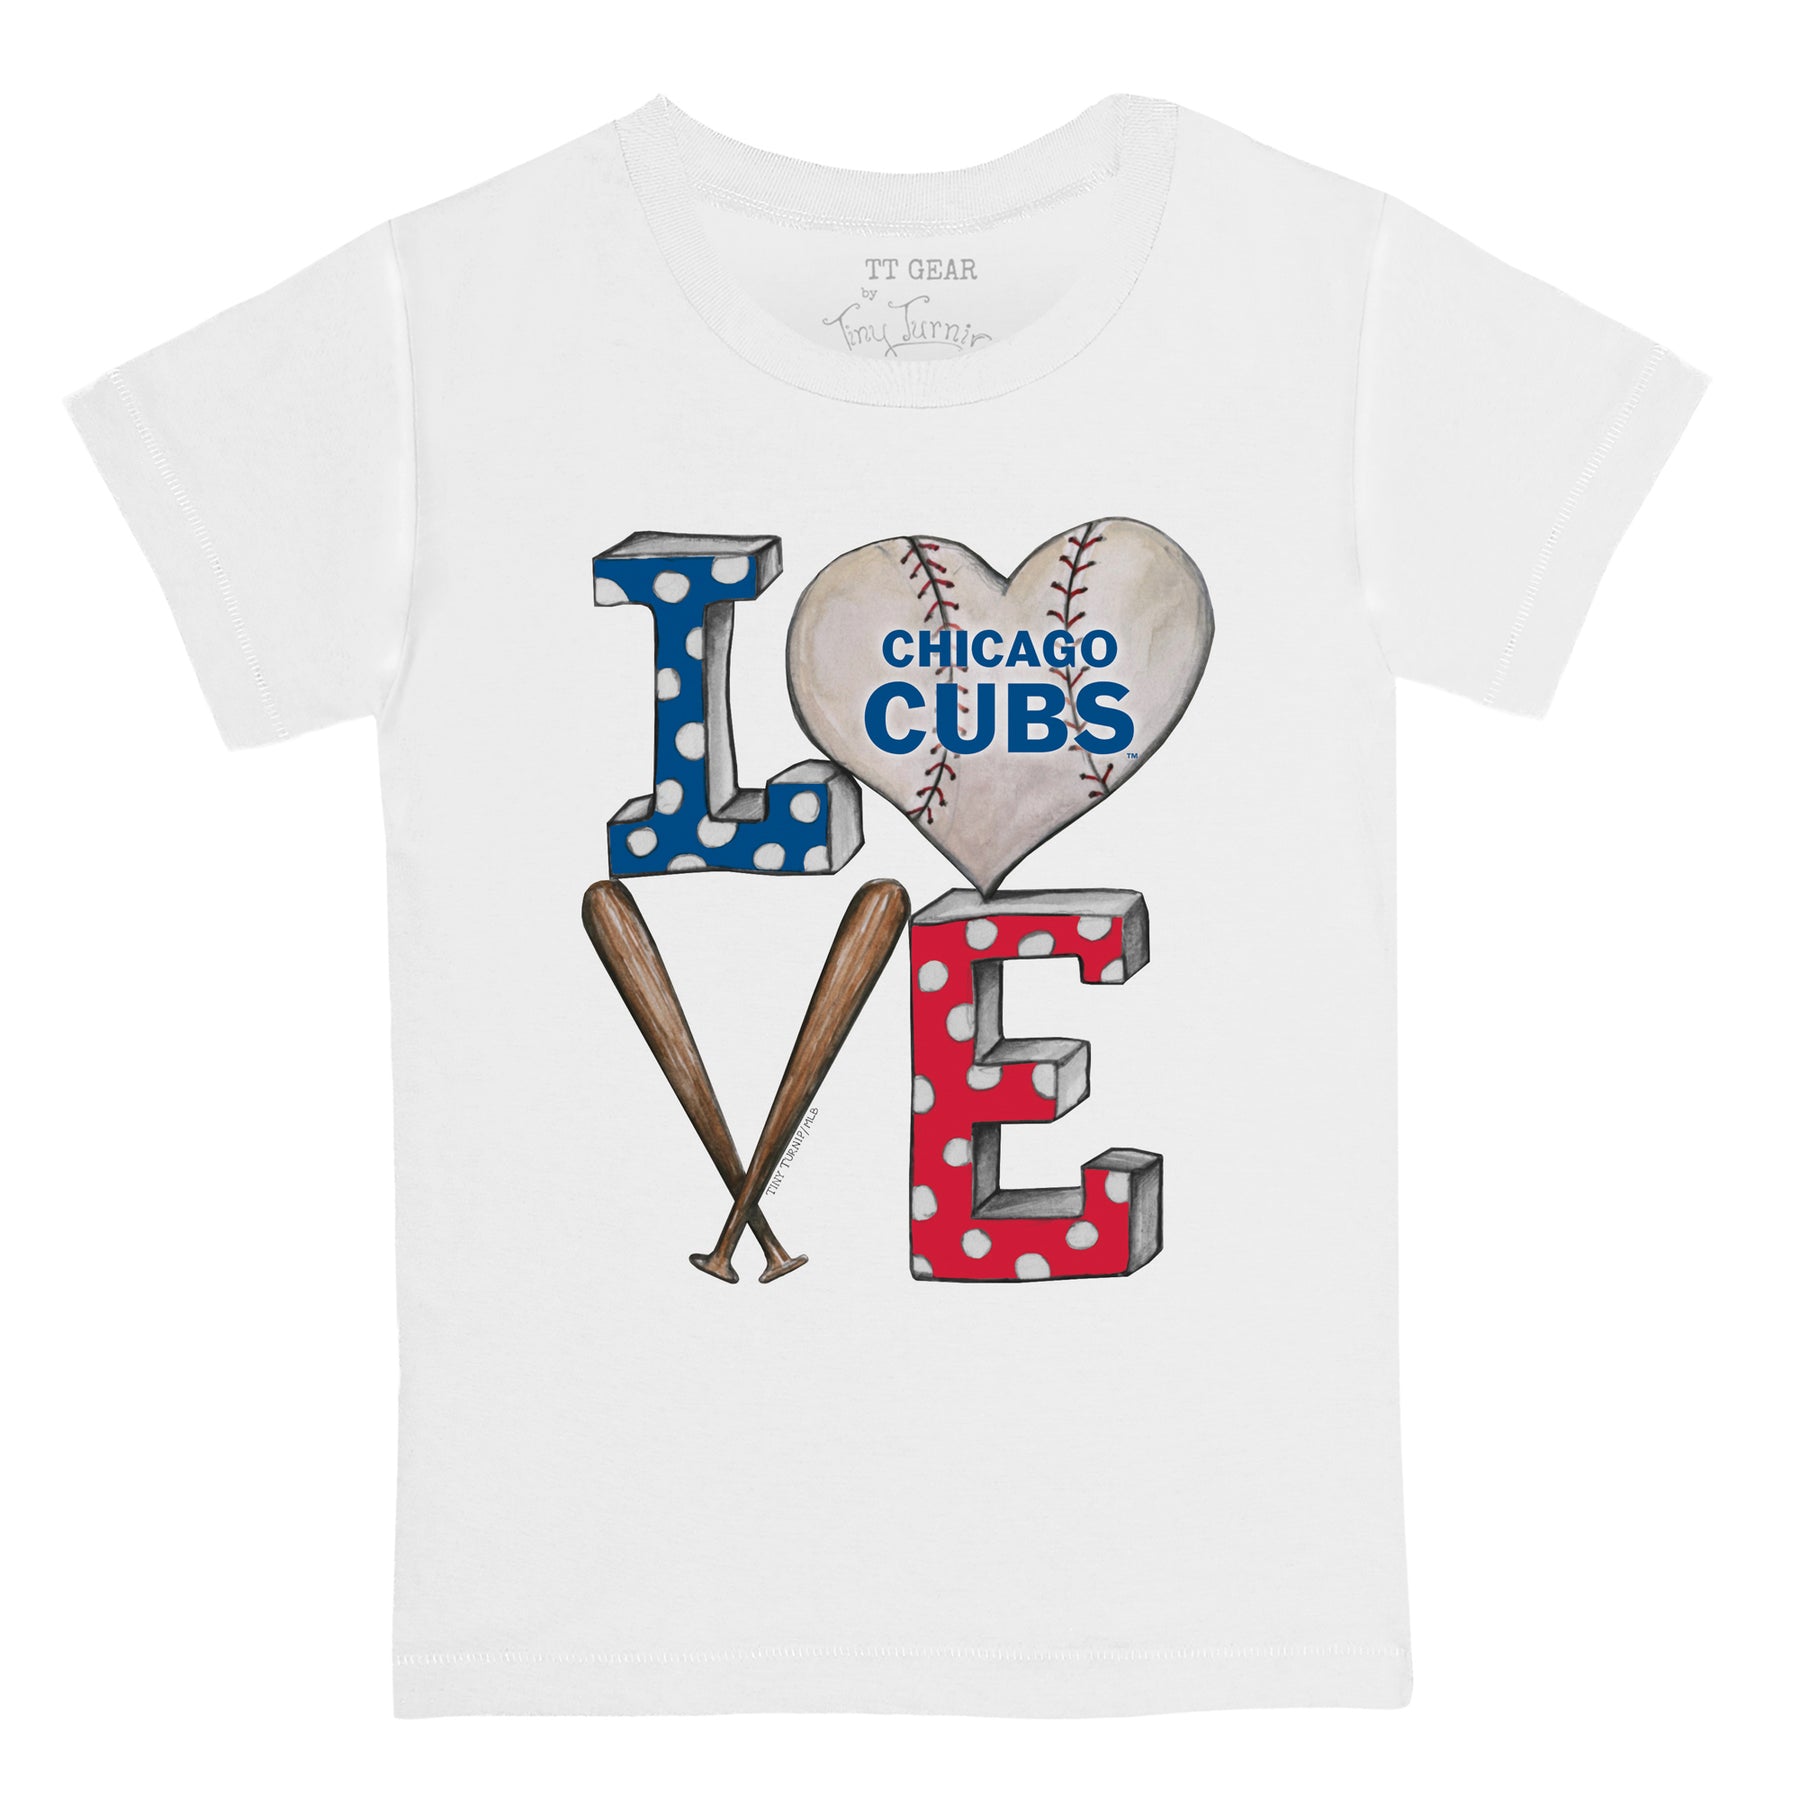 Girls Toddler Tiny Turnip Royal Chicago Cubs Sugar Skull Fringe T-Shirt Size:3T